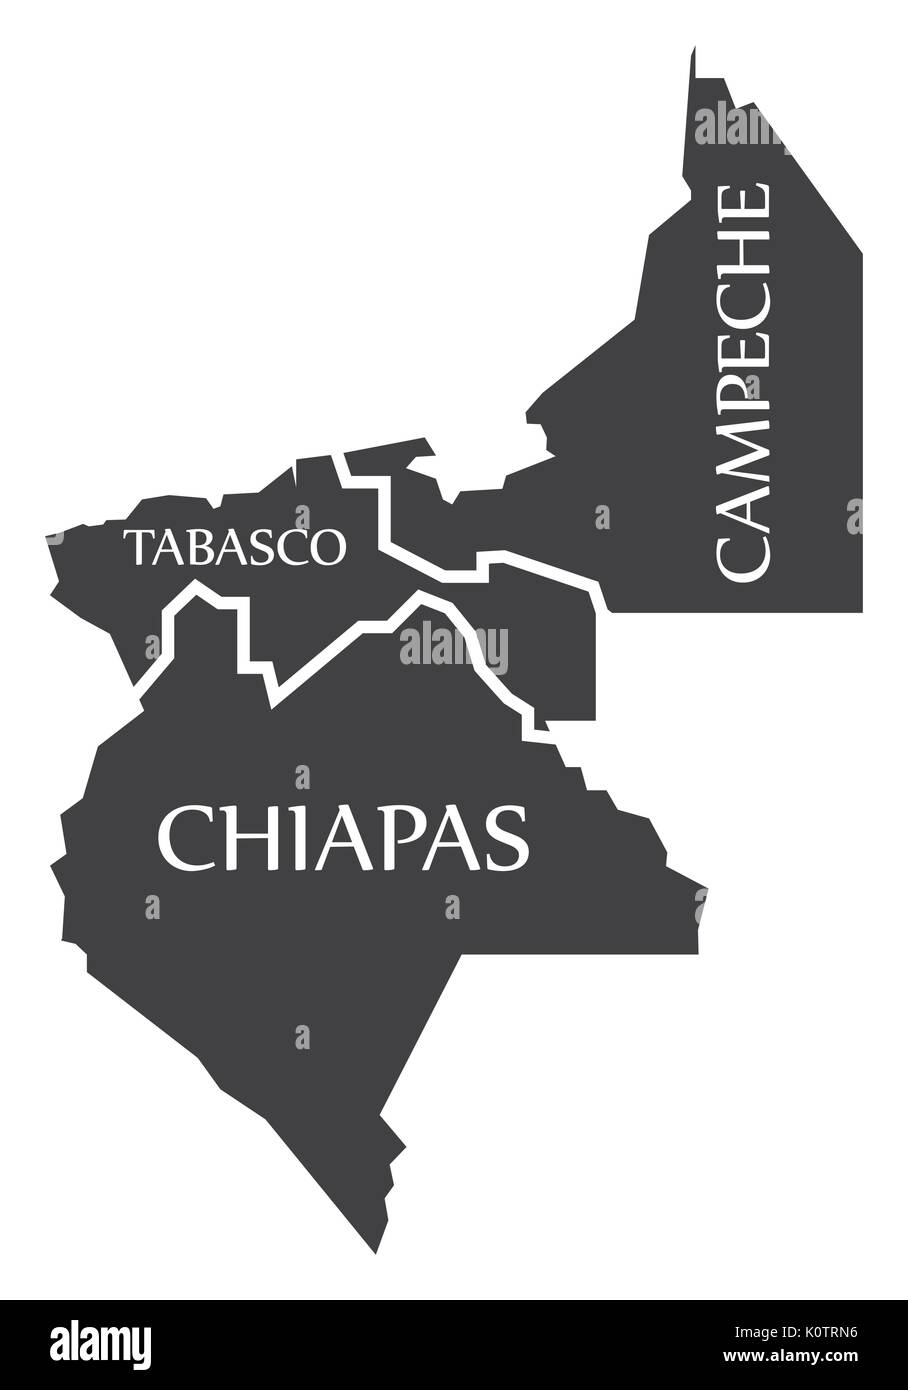 Tabasco - Chiapas - Campeche Map Mexico illustration Stock Vector